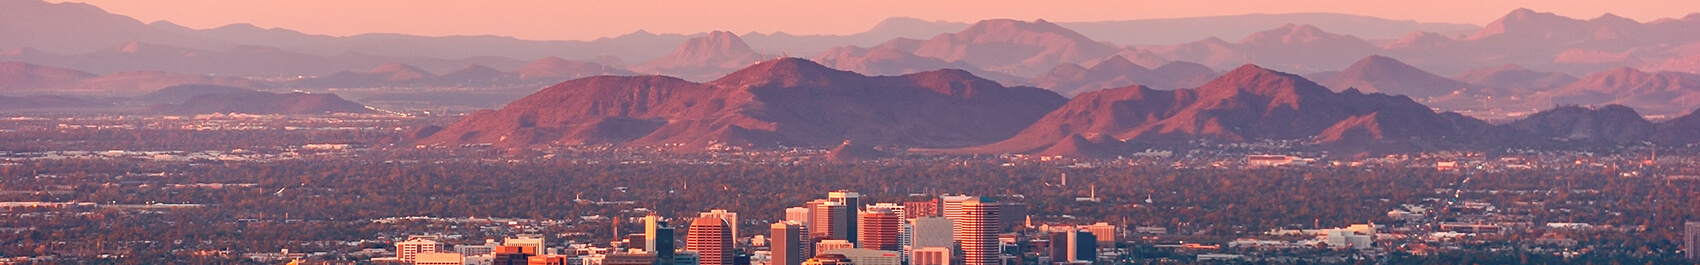 Skyline view of Greater Phoenix